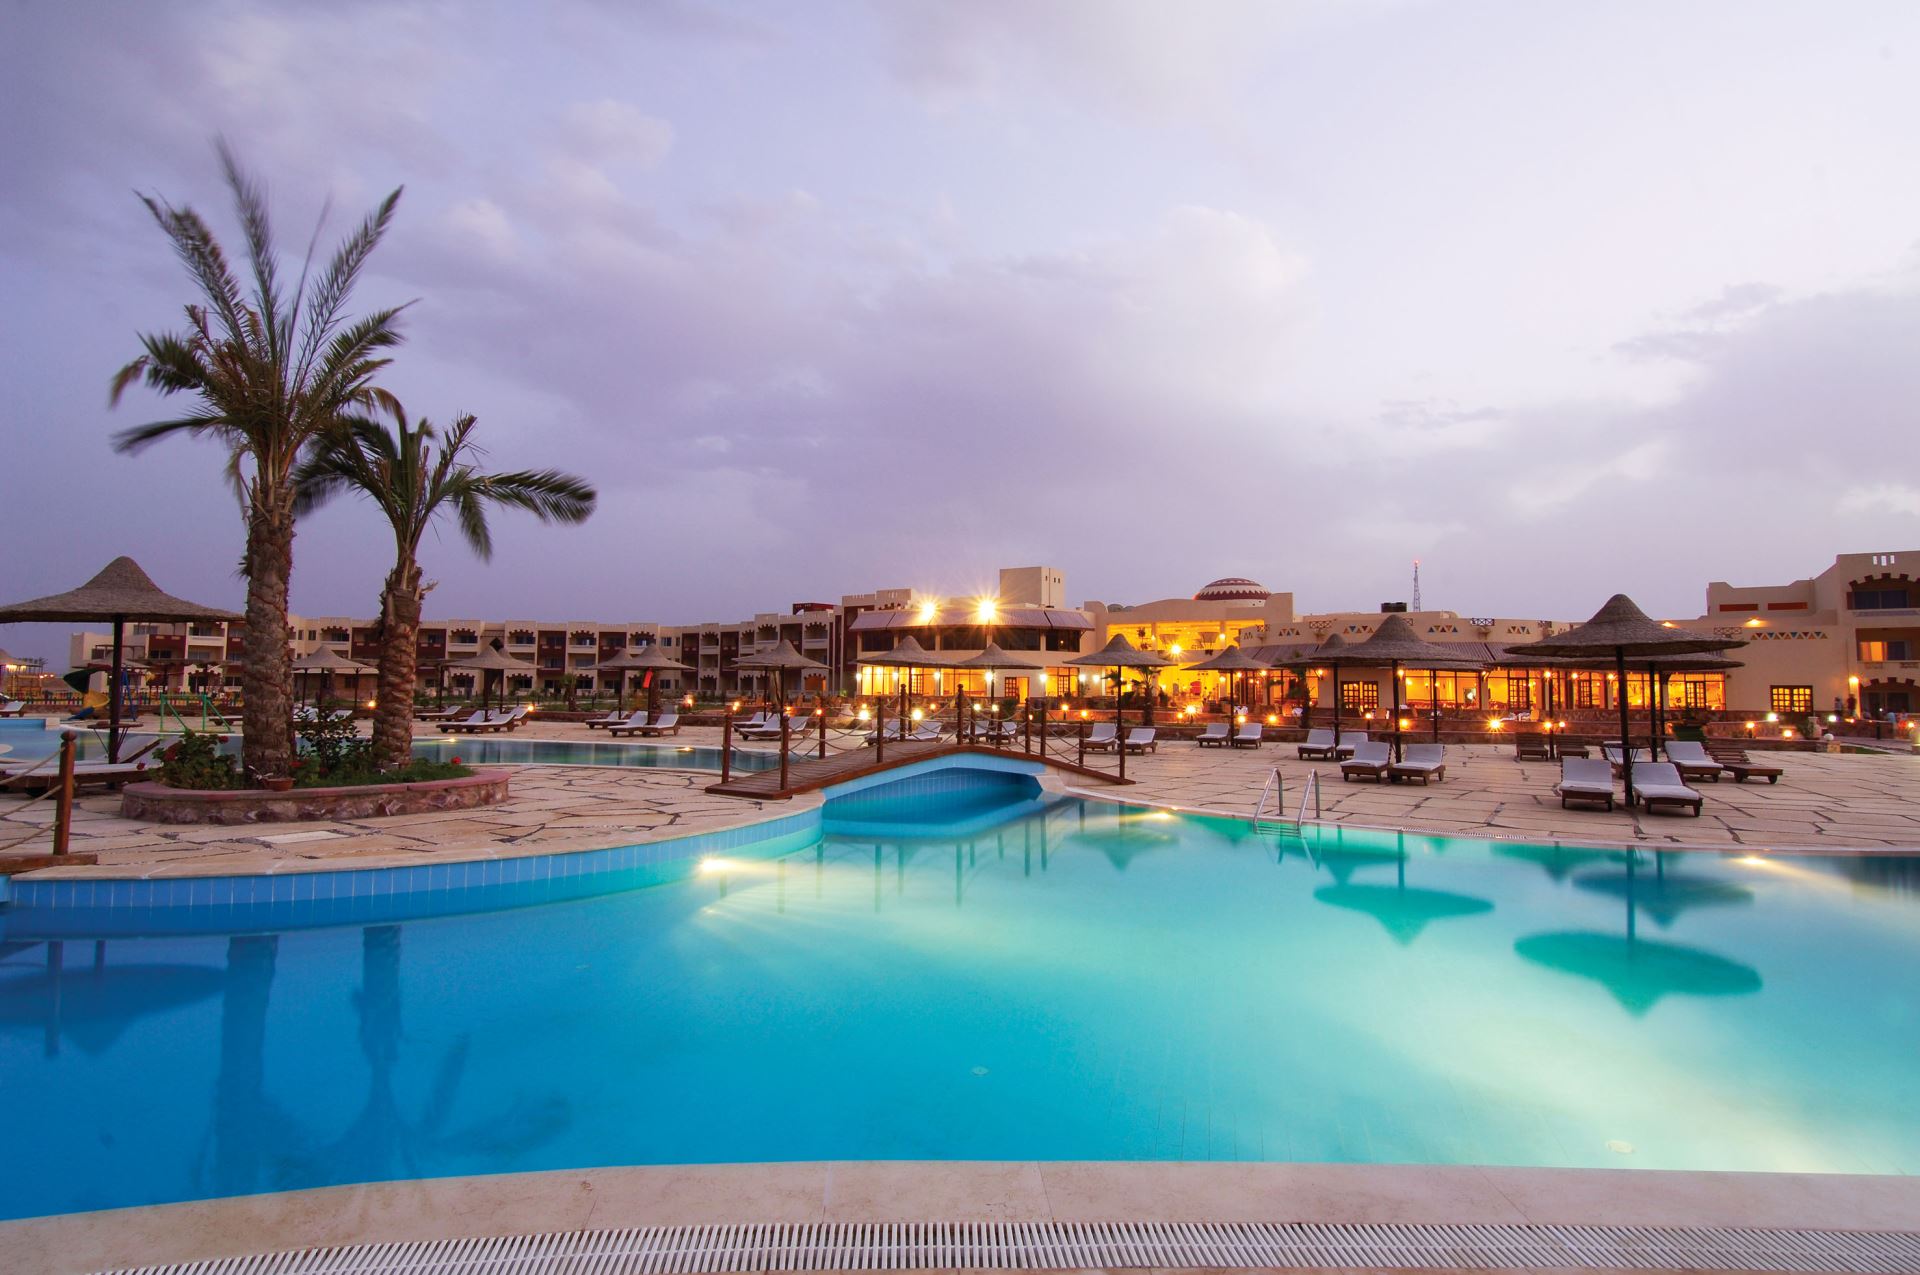 Jolie Beach Resort Marsa Alam - Marsa Alam Egipt - opis hotelu | TUI